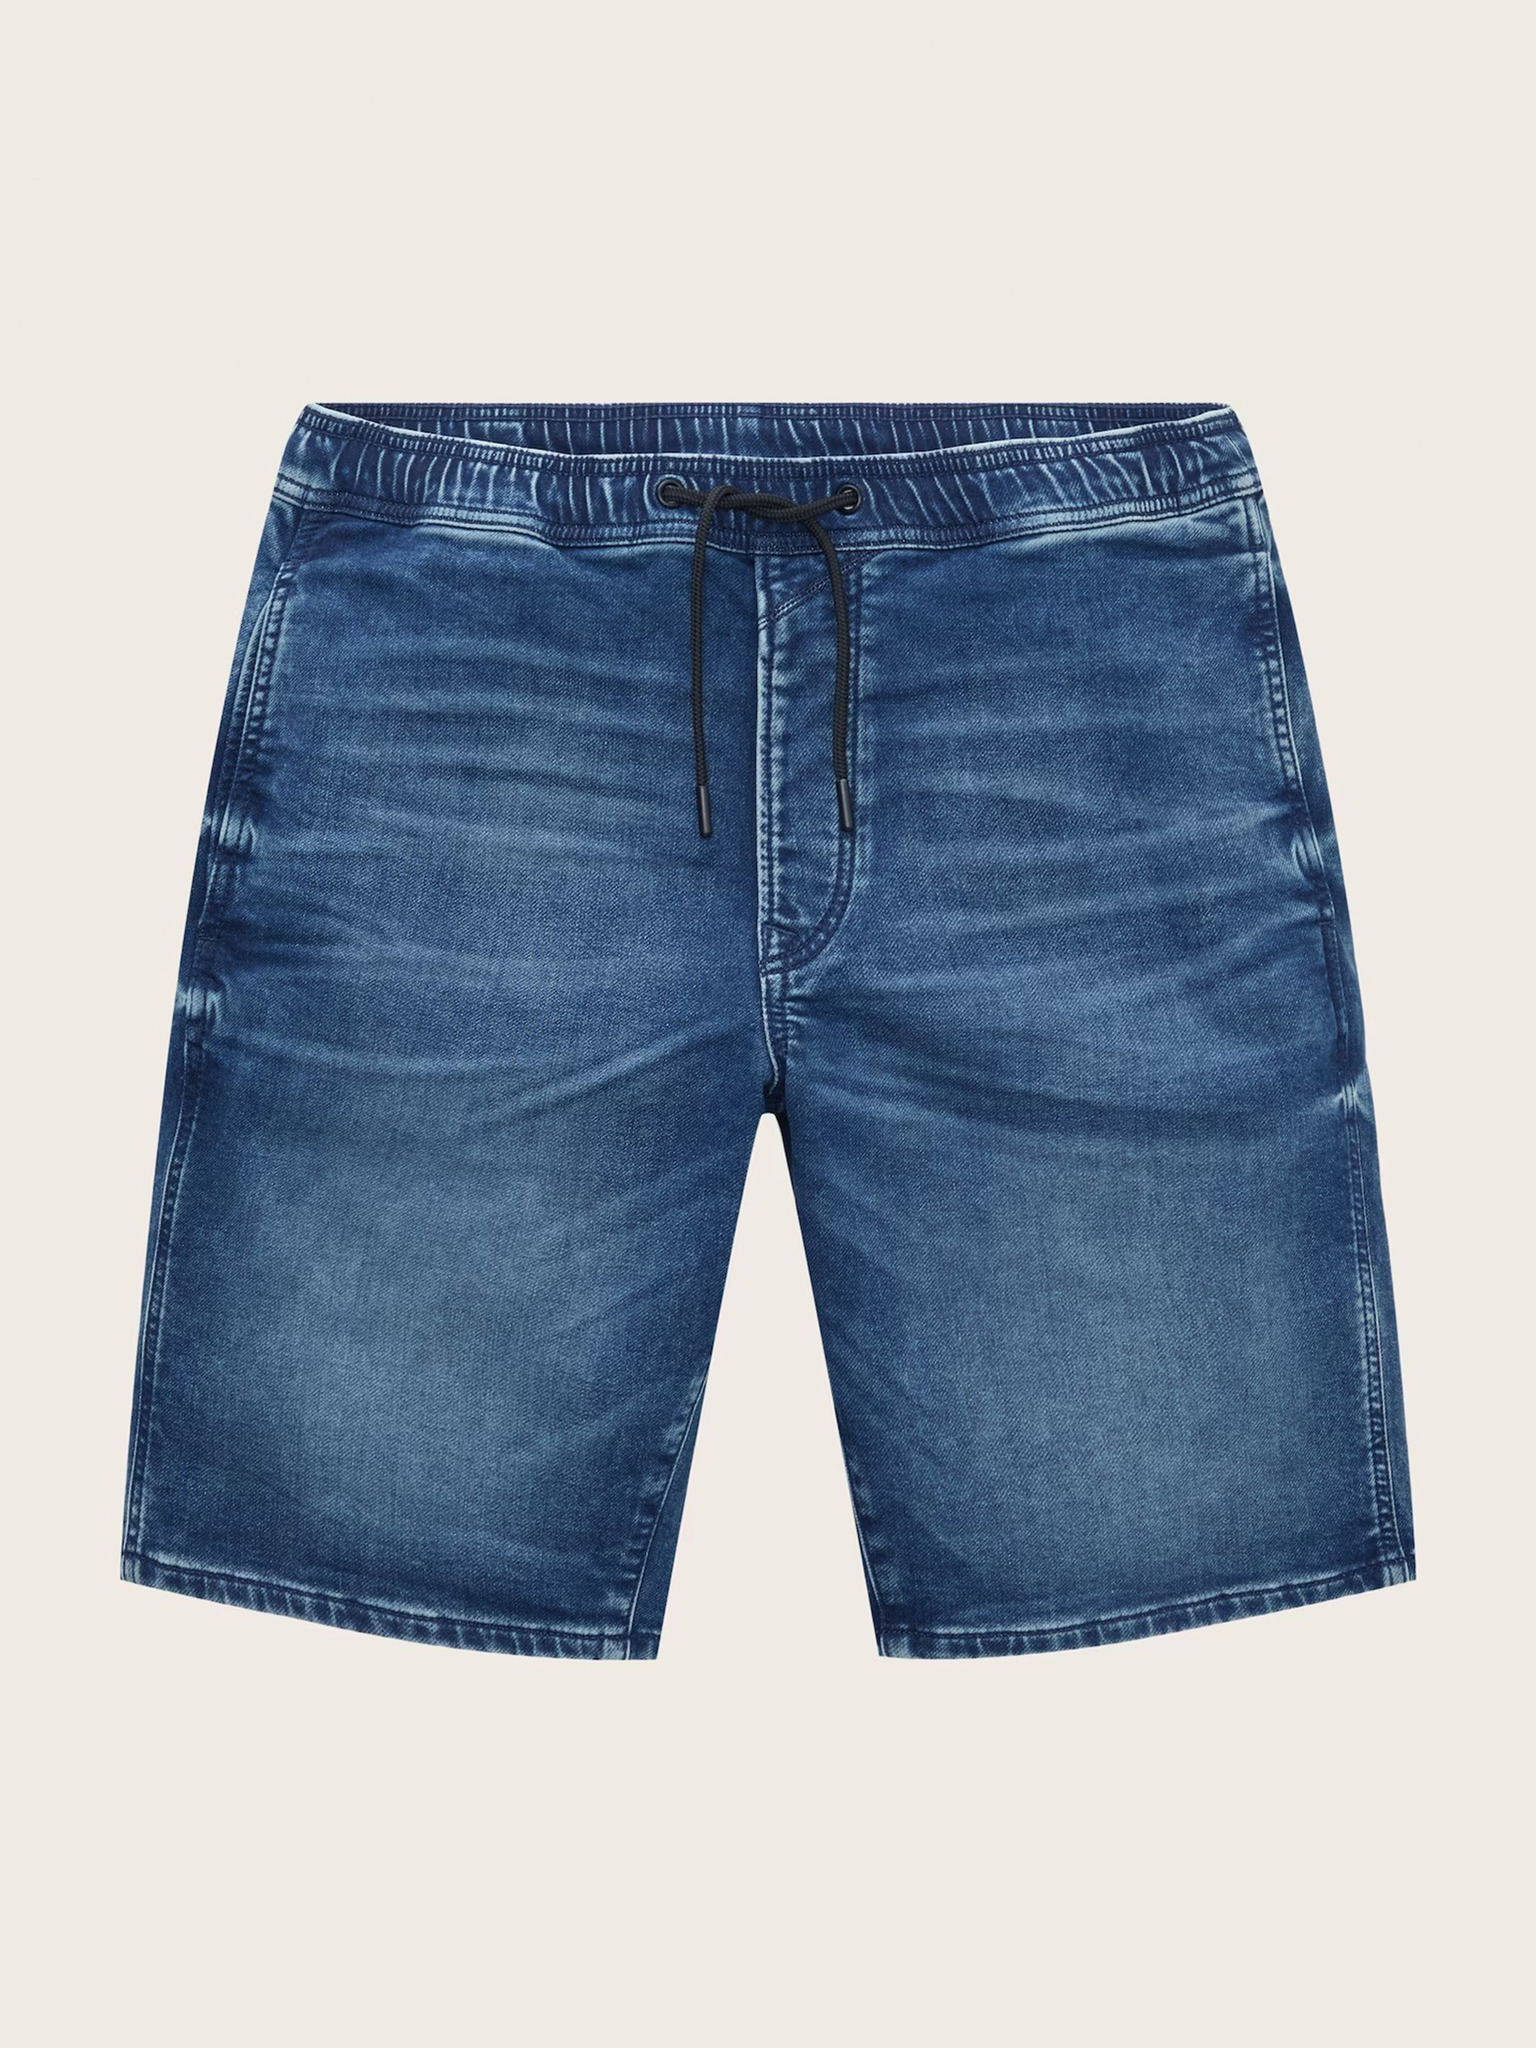 Buy Blue Denim Shorts for Boys Online at Jack&Jones Junior |144680601